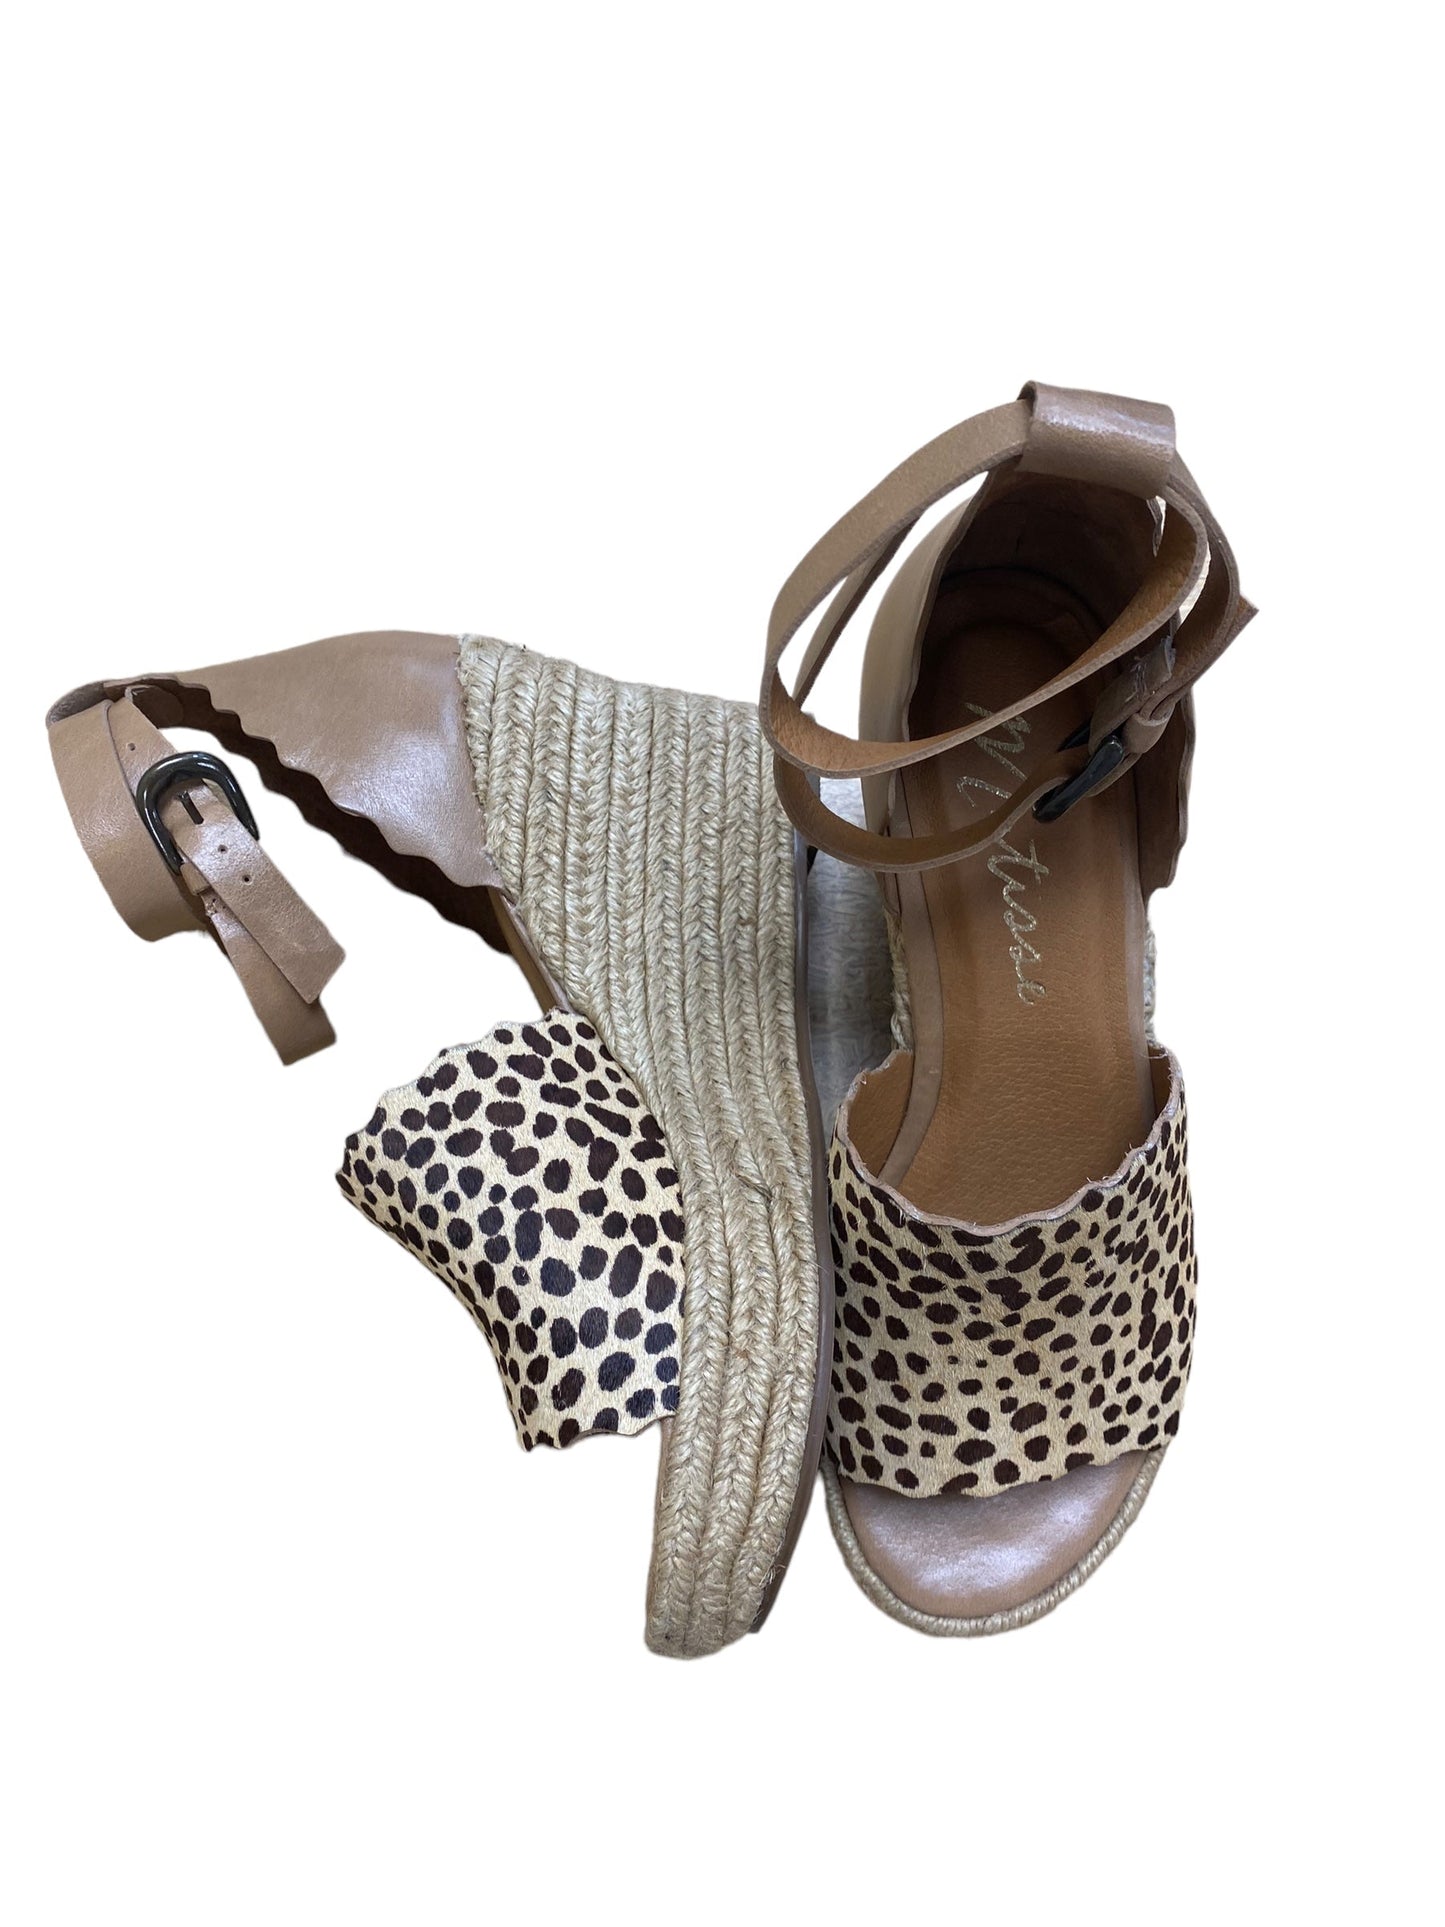 Sandals Heels Wedge By Matisse  Size: 8